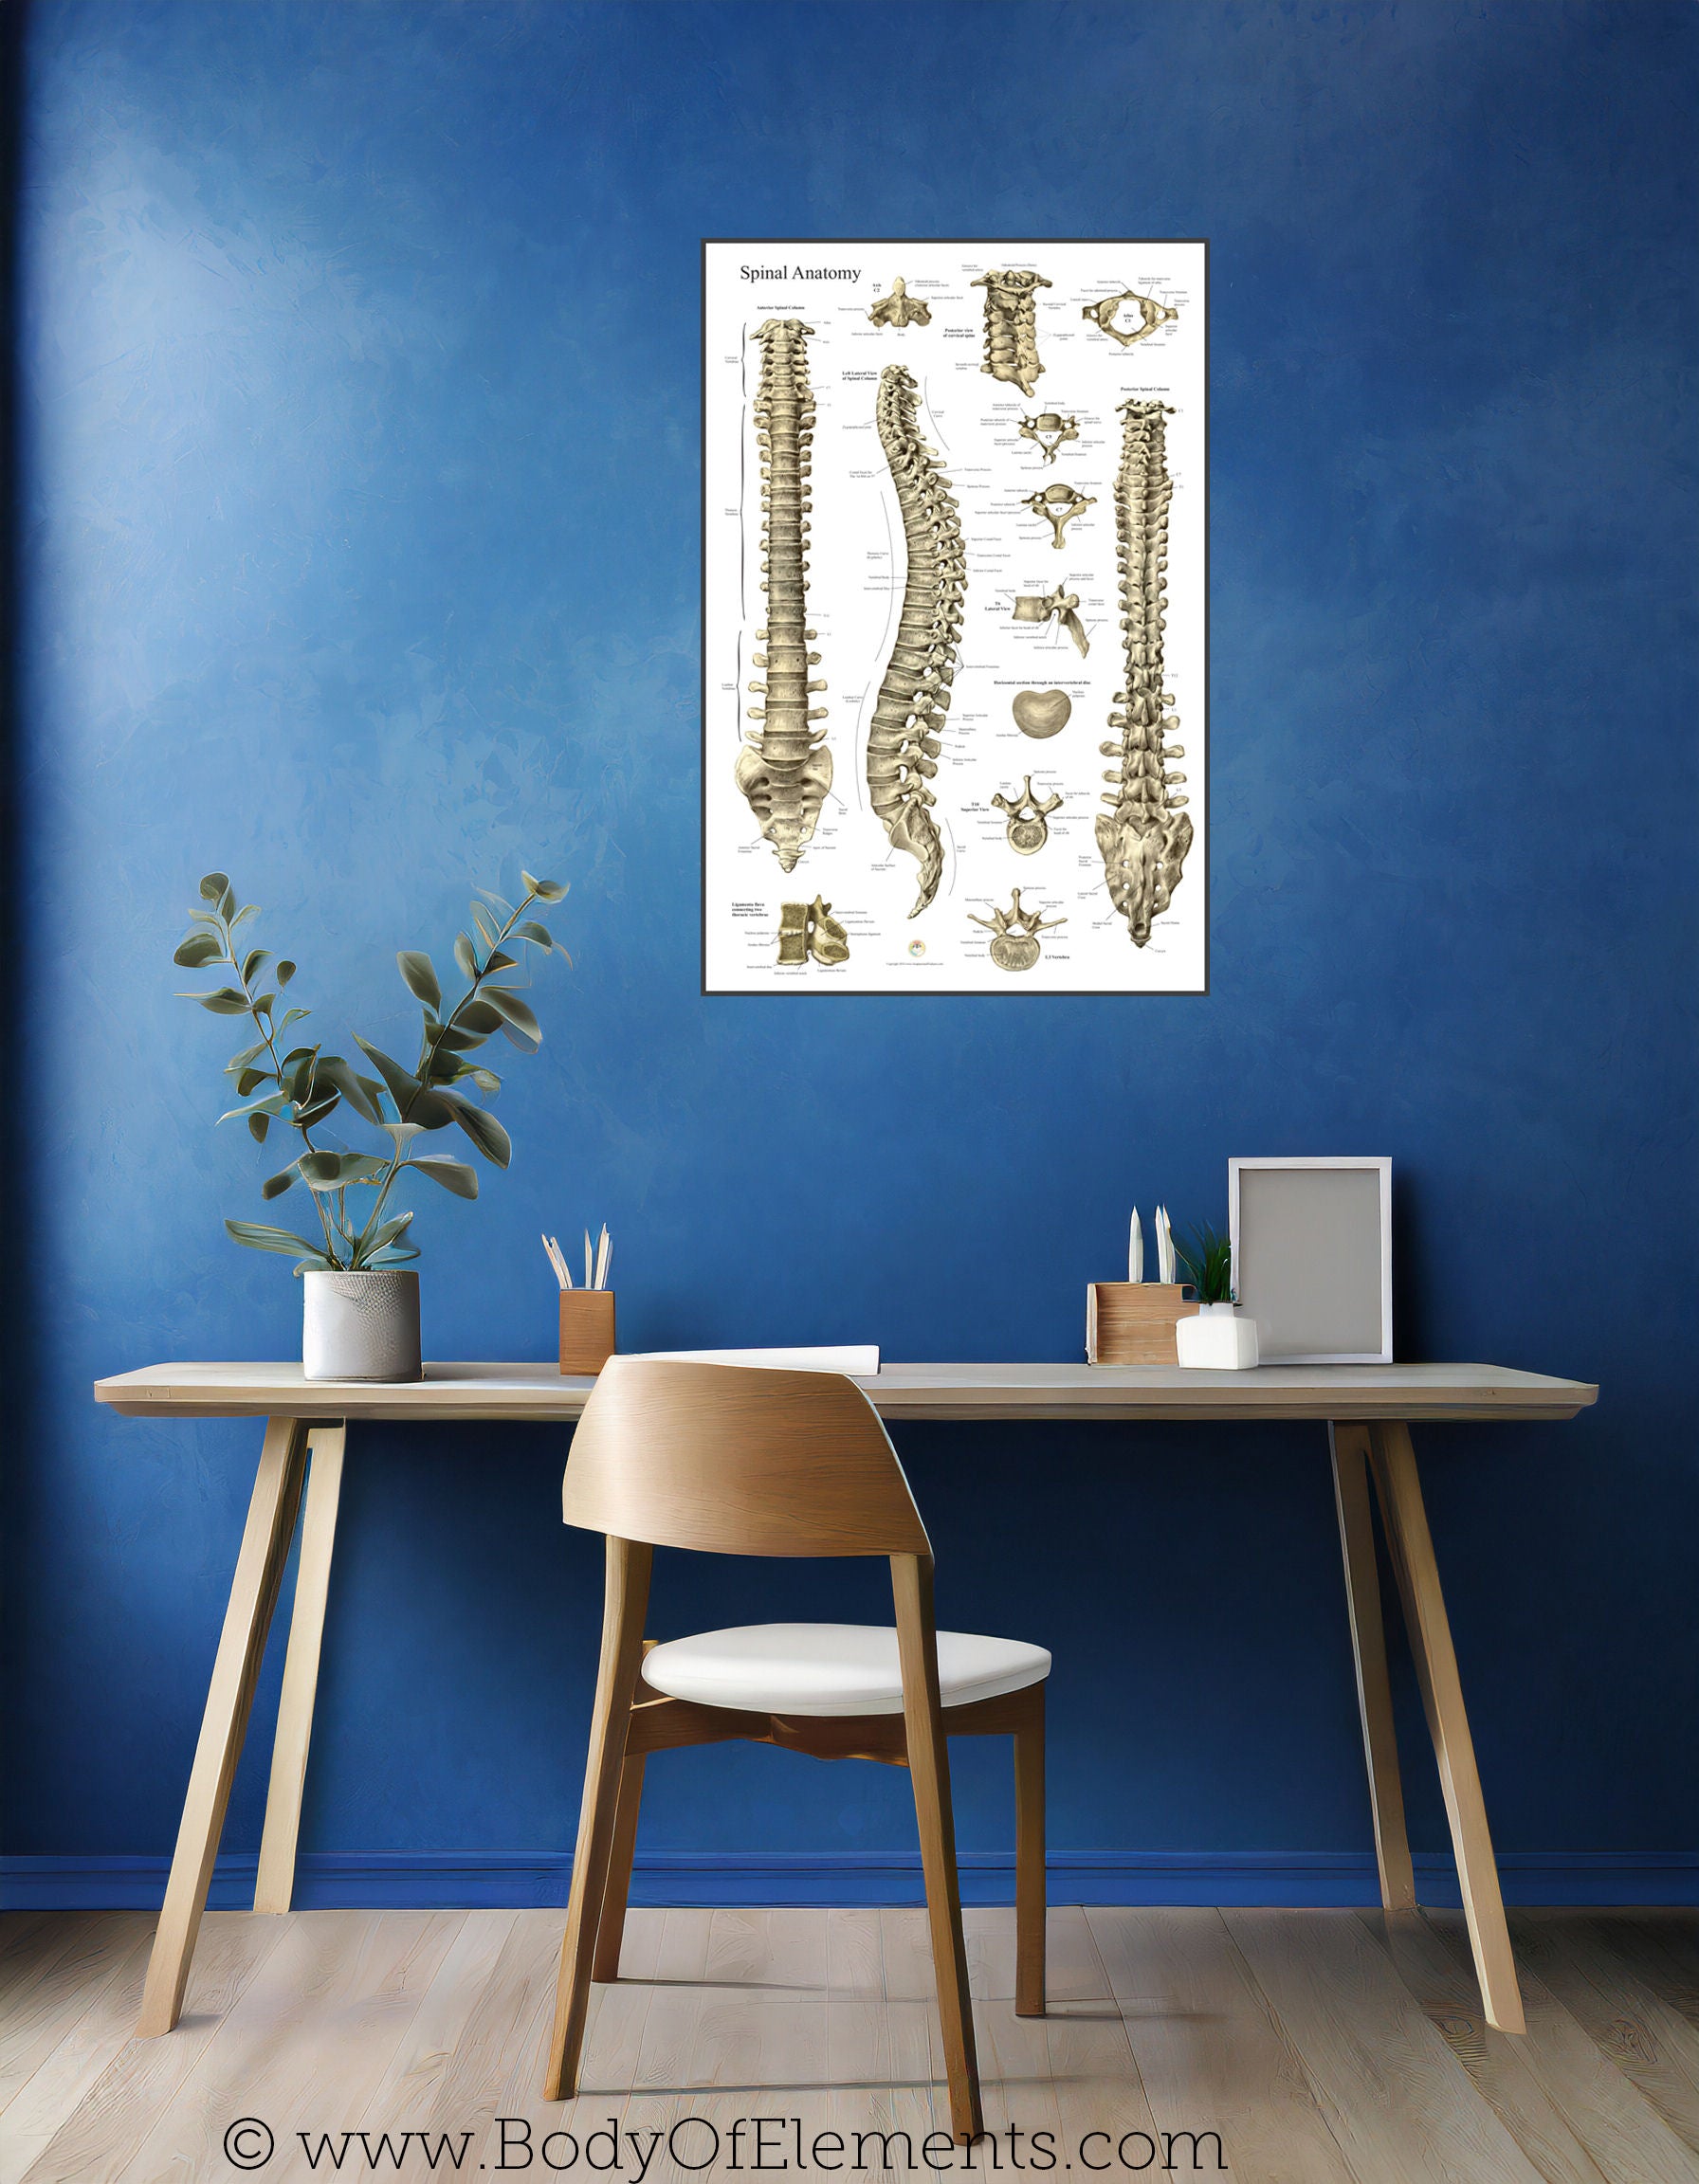 Human spine anatomy wall chart